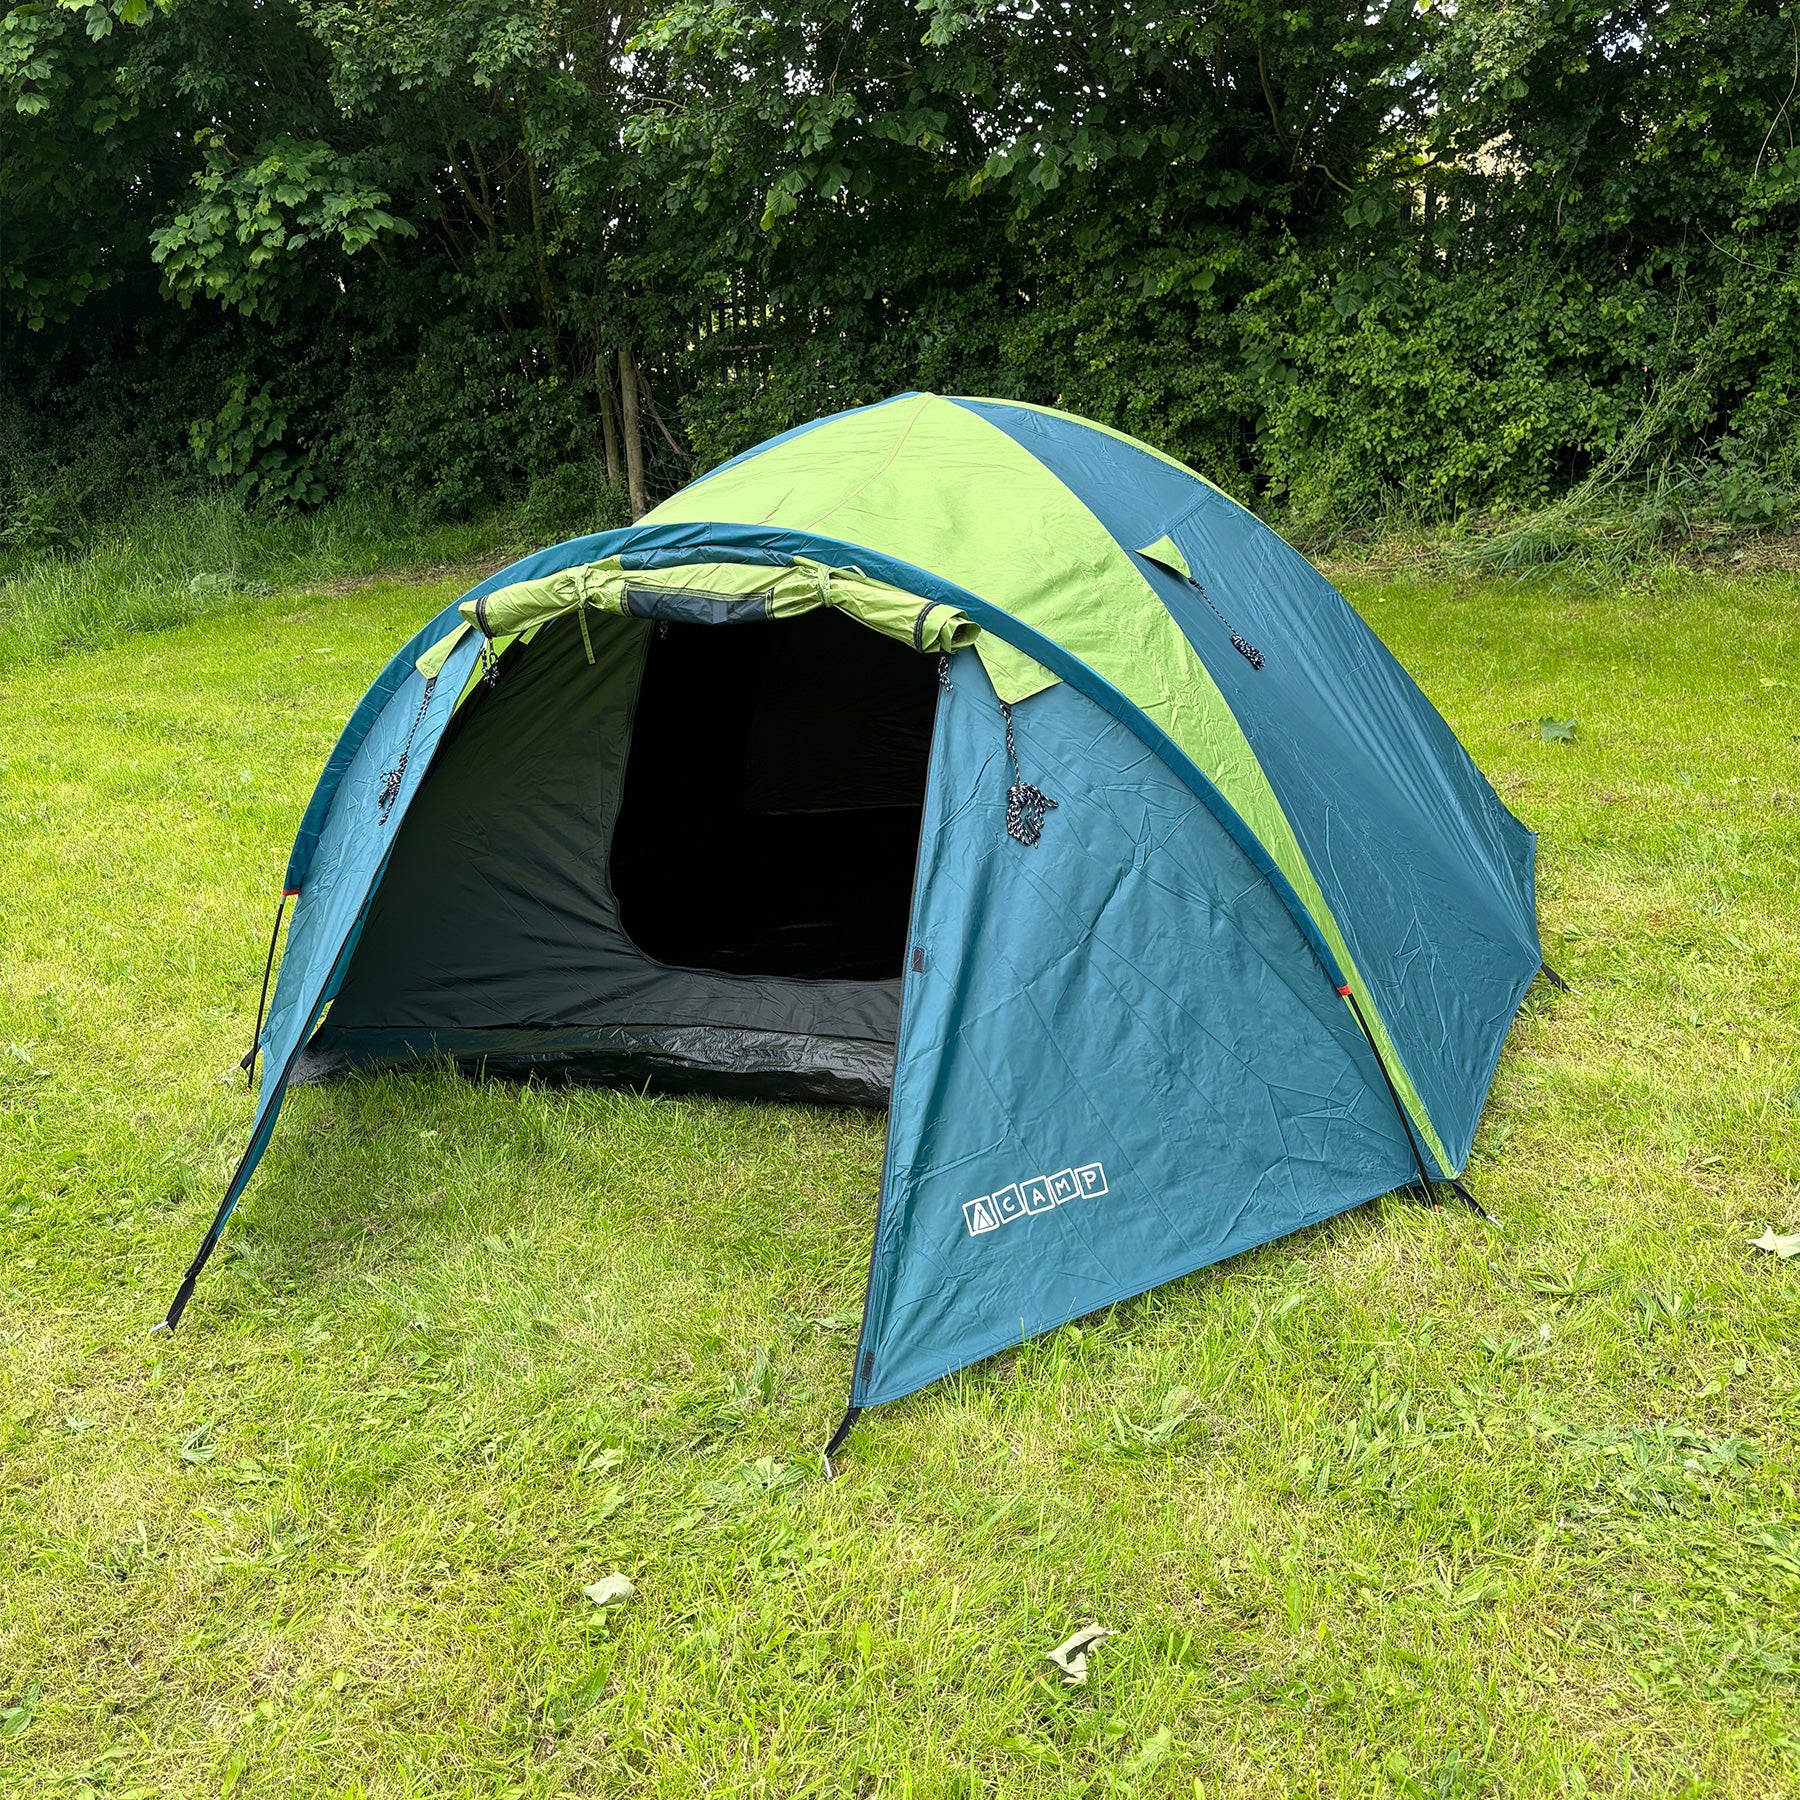 Tambu Acamp 3-4 Person Dome Tent - Dark Turquoise / Olive Green - 55% OFF